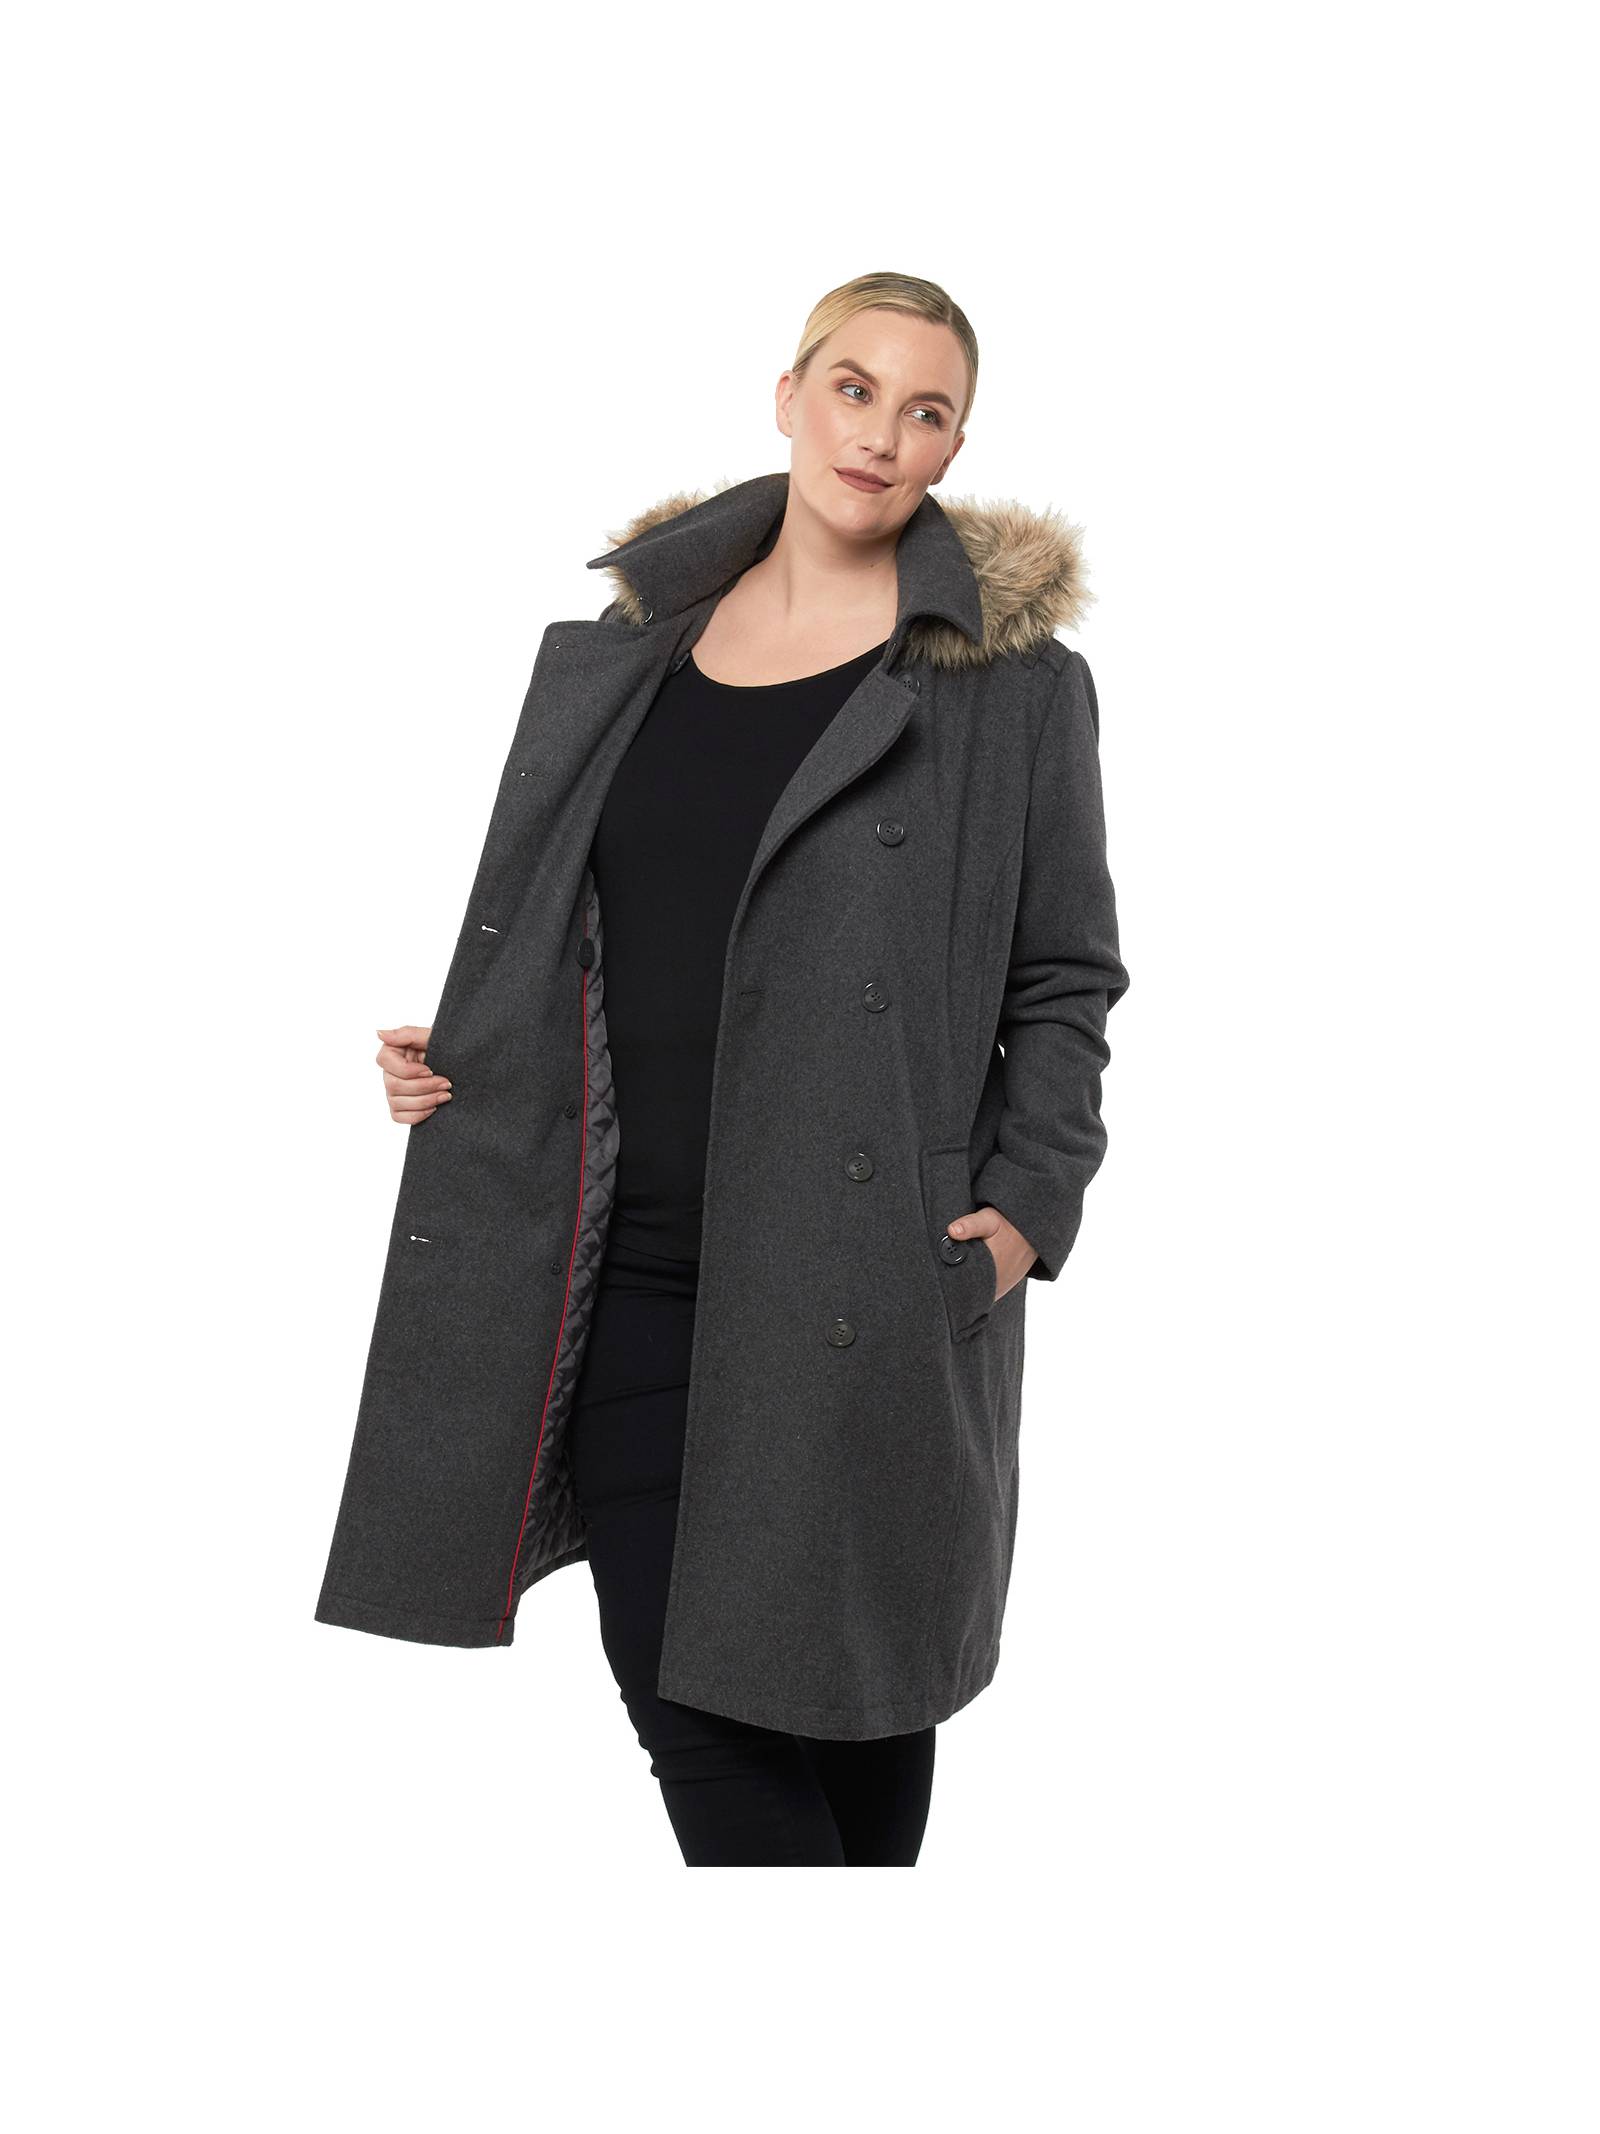 Alpine Swiss Womens Parka Trench Pea Coat Belt Jacket Faux Fur Hood Reg & Plus Sizes - image 5 of 7